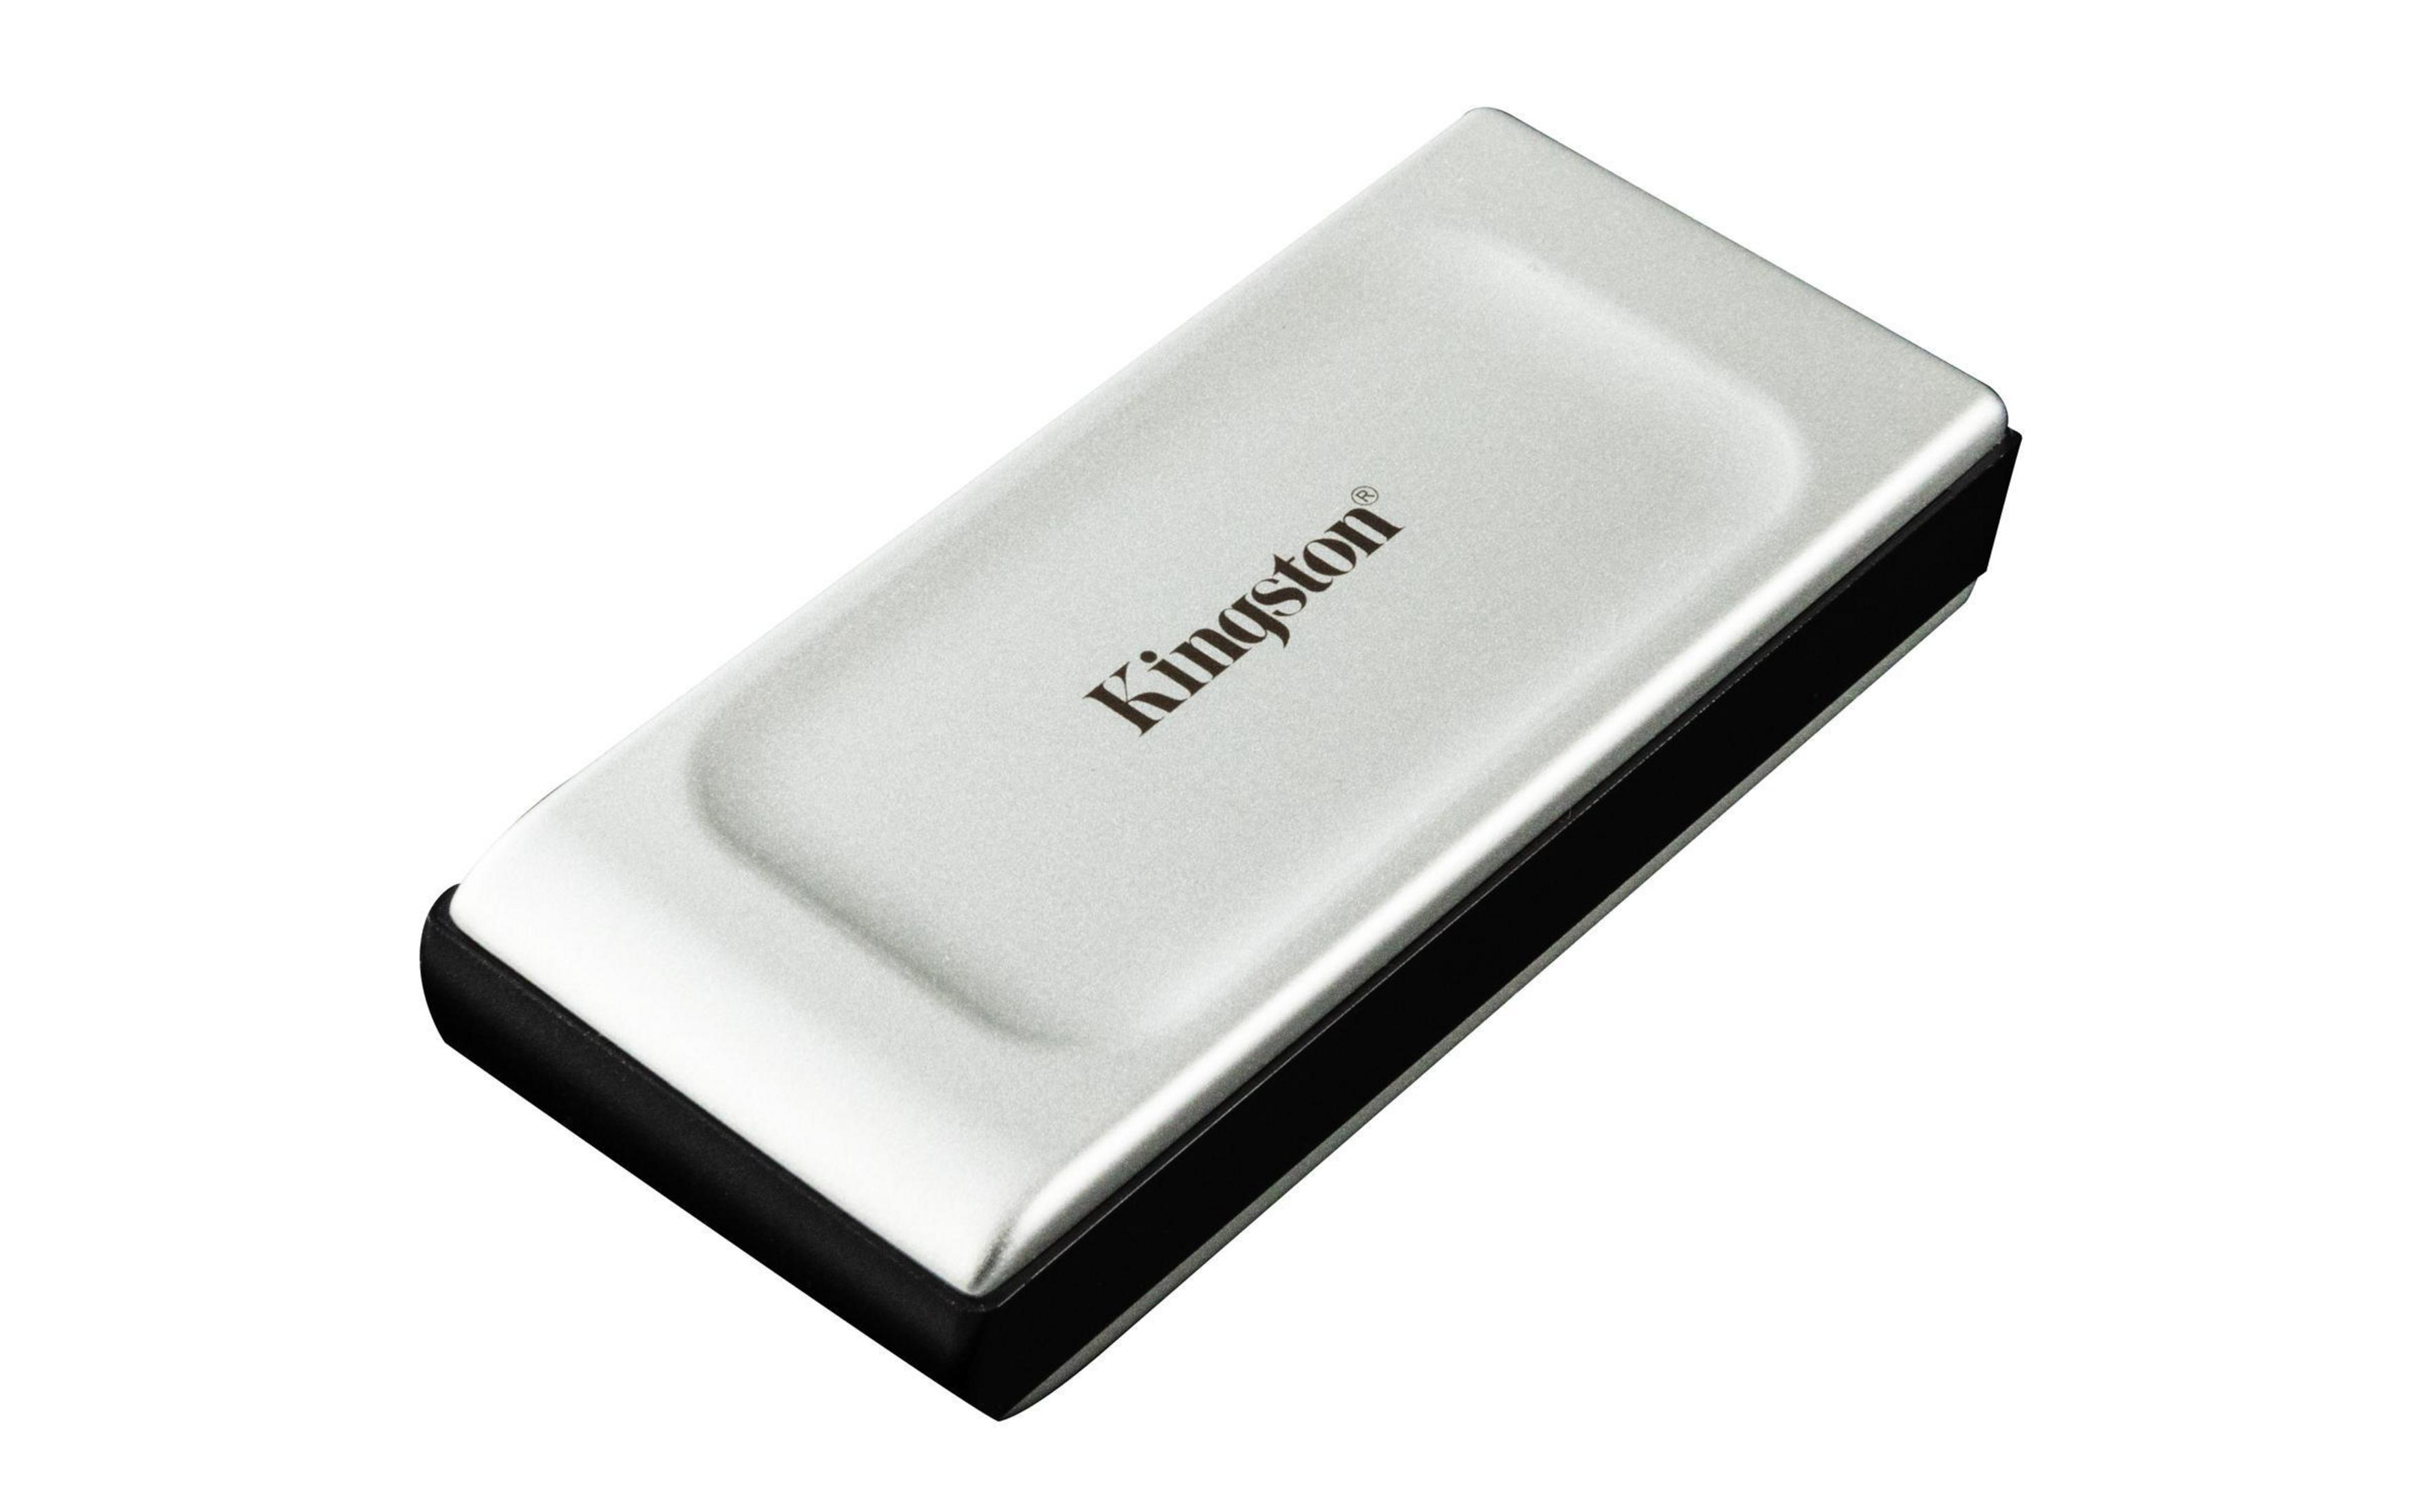 KINGSTON SXS2000/500G, 500 GB SSD, Silber extern